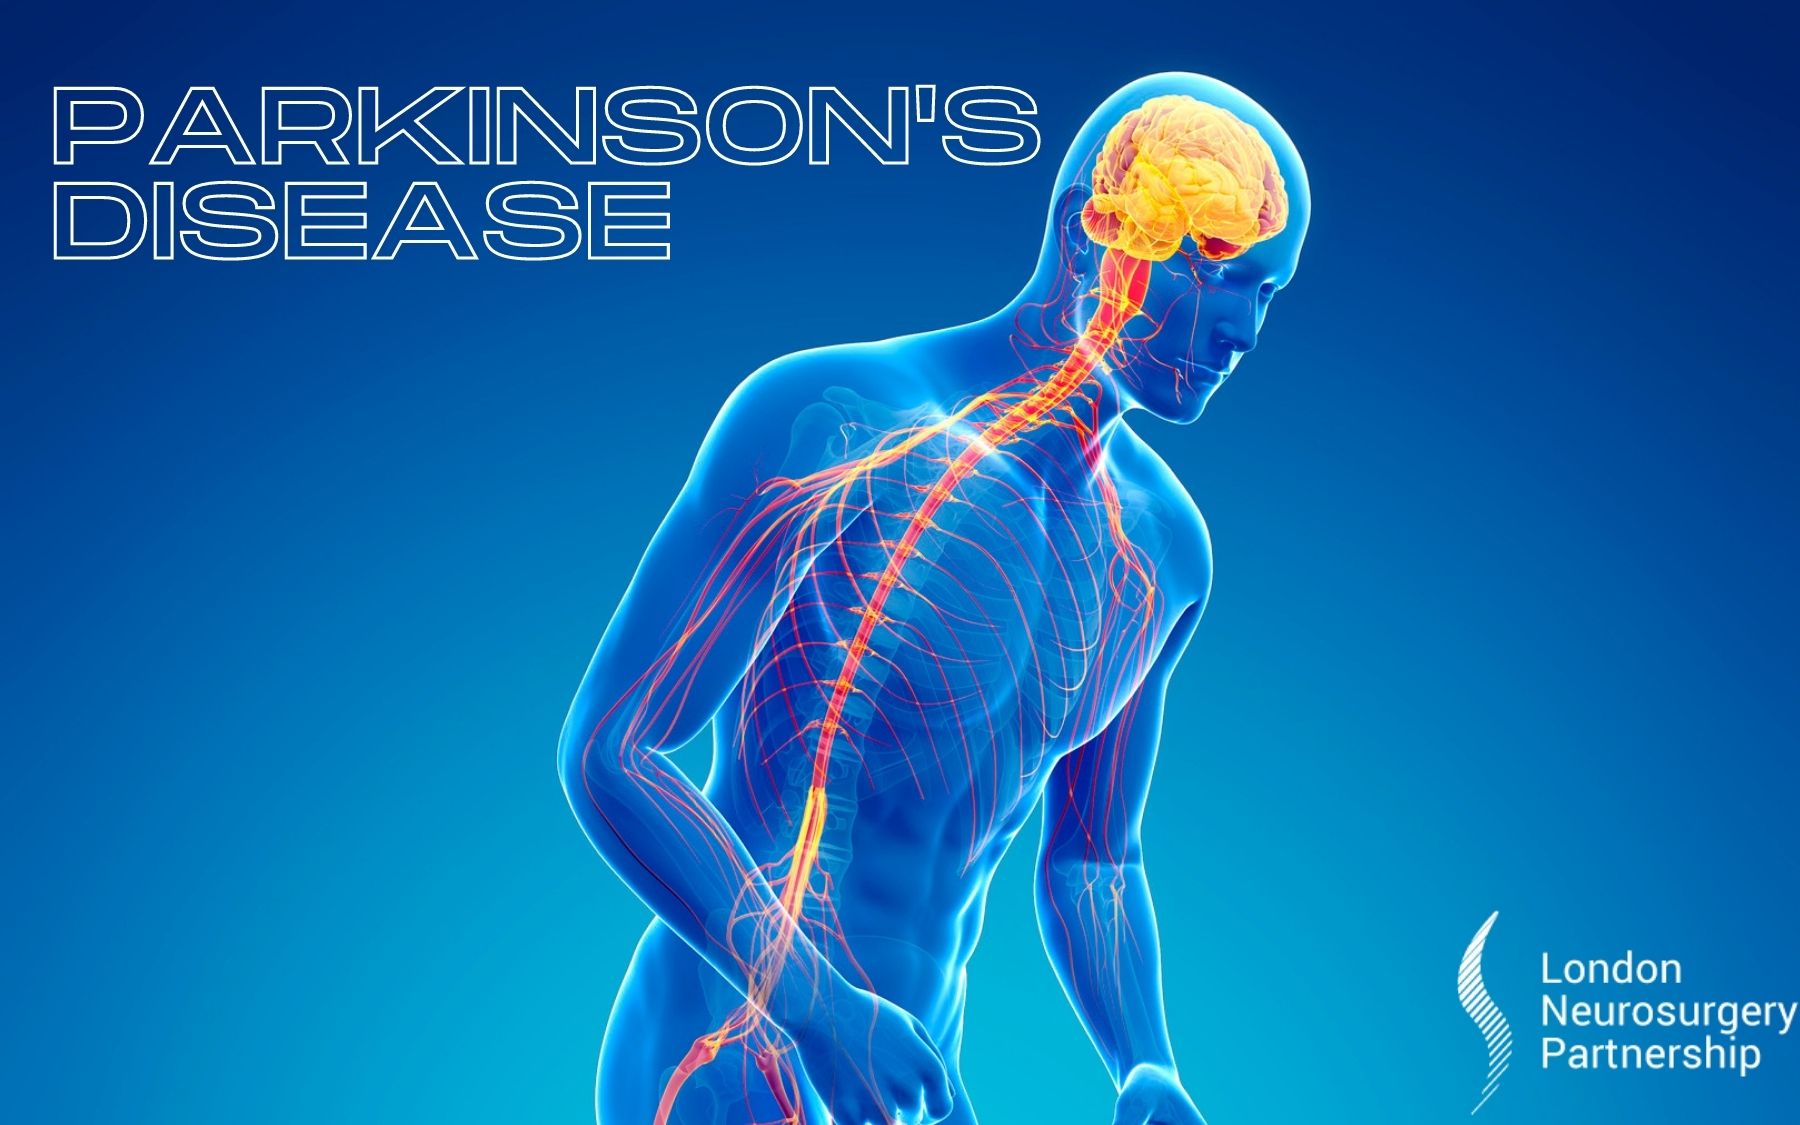 Parkinson's Disease London Neurosurgery Partnership